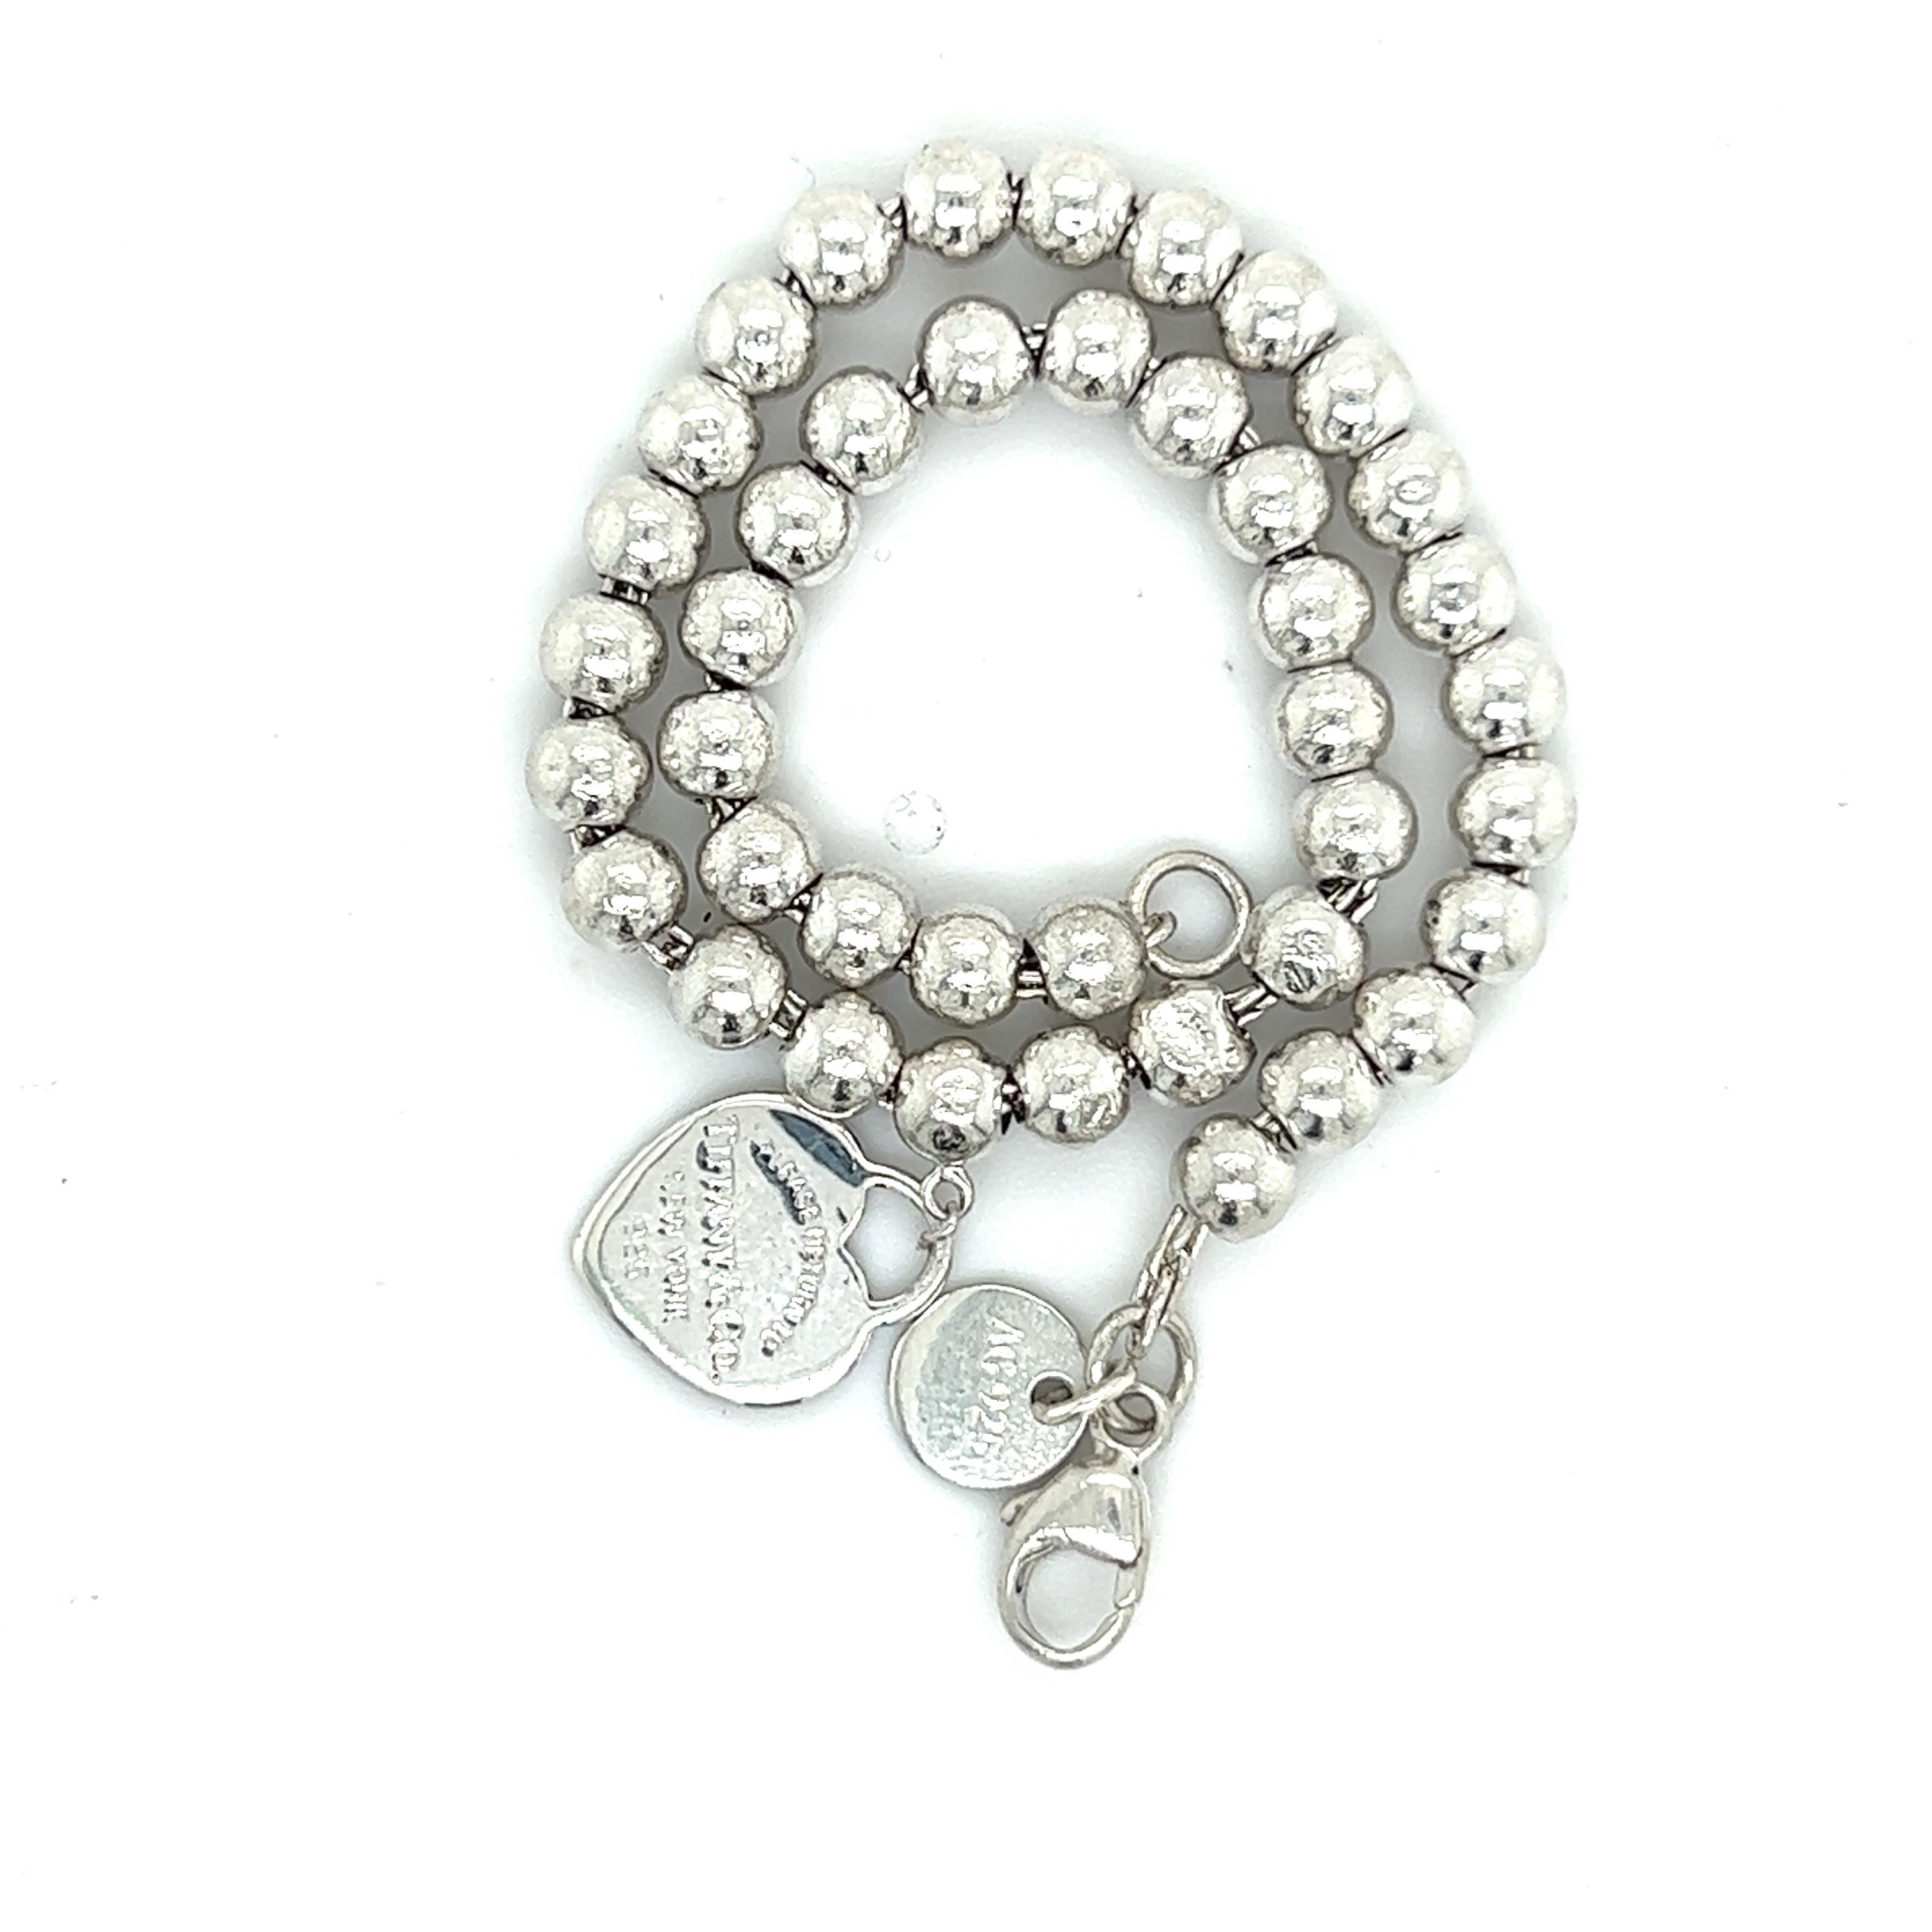 tiffany and co silver bead bracelet